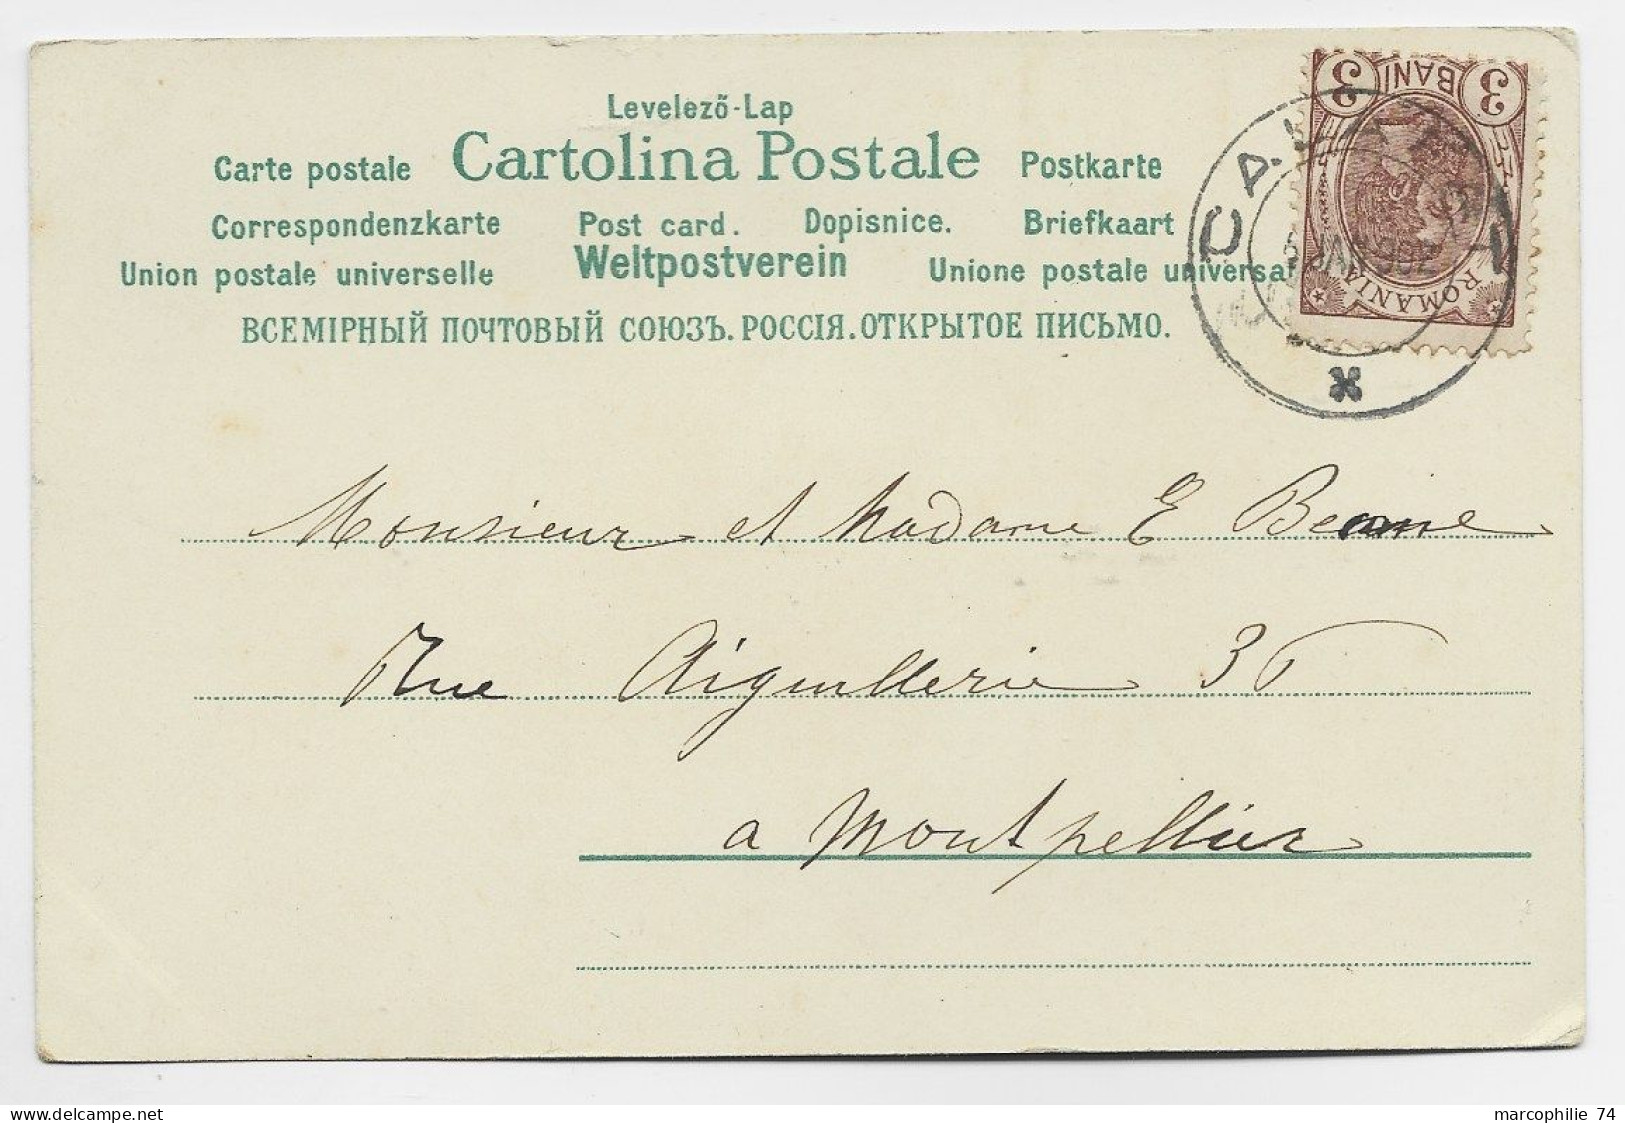 ROMANIA ROUMANIE 3 BANI  CAVAFAT 5 JAN 1902 SOLO CARTA POSTALA  FANTAISE TO FRANCE - Storia Postale